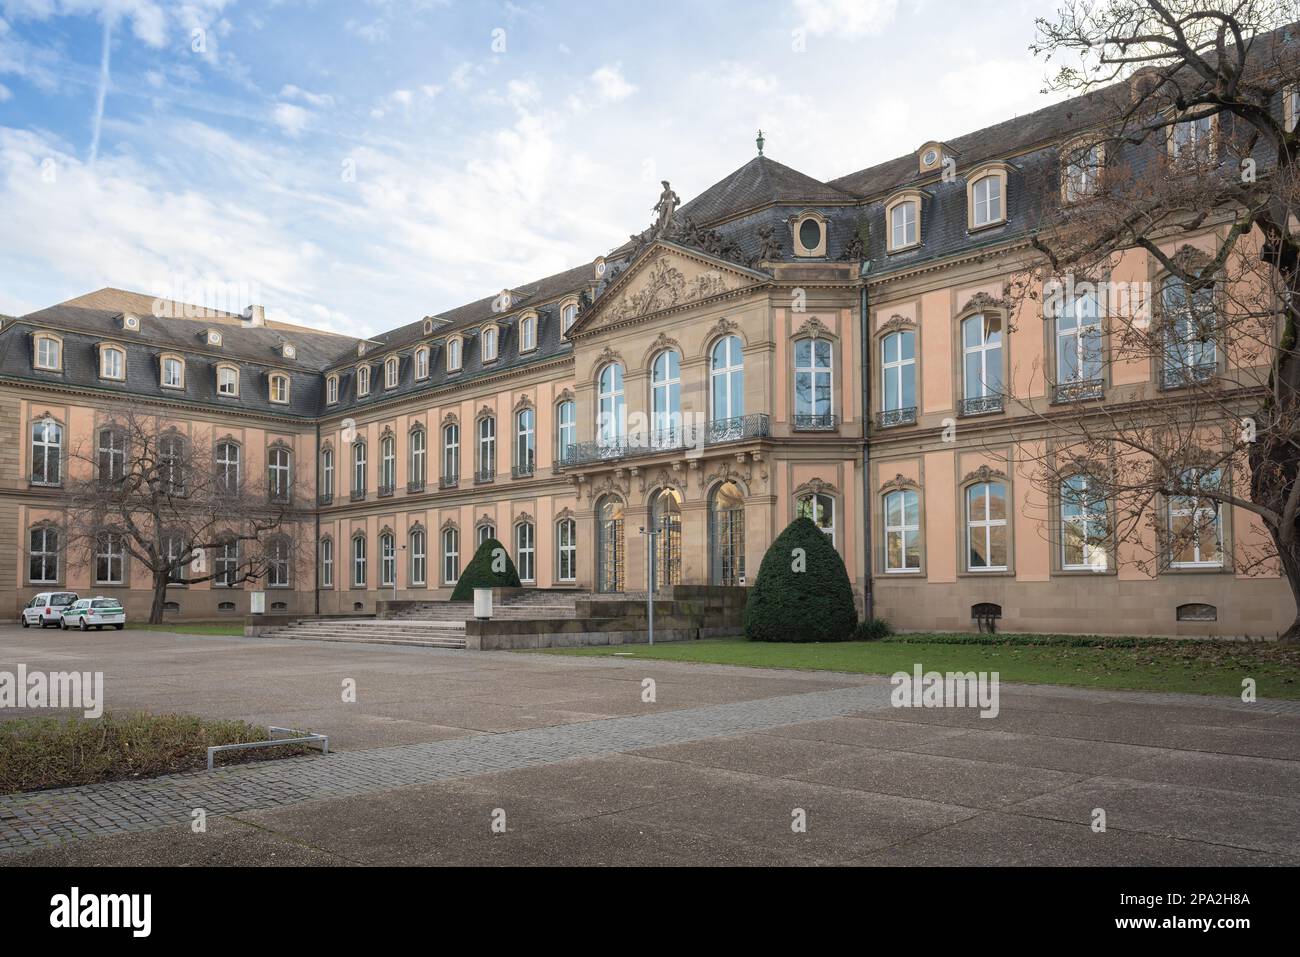 Neues Schloss (New Palace) facade - Stuttgart, Germany Stock Photo